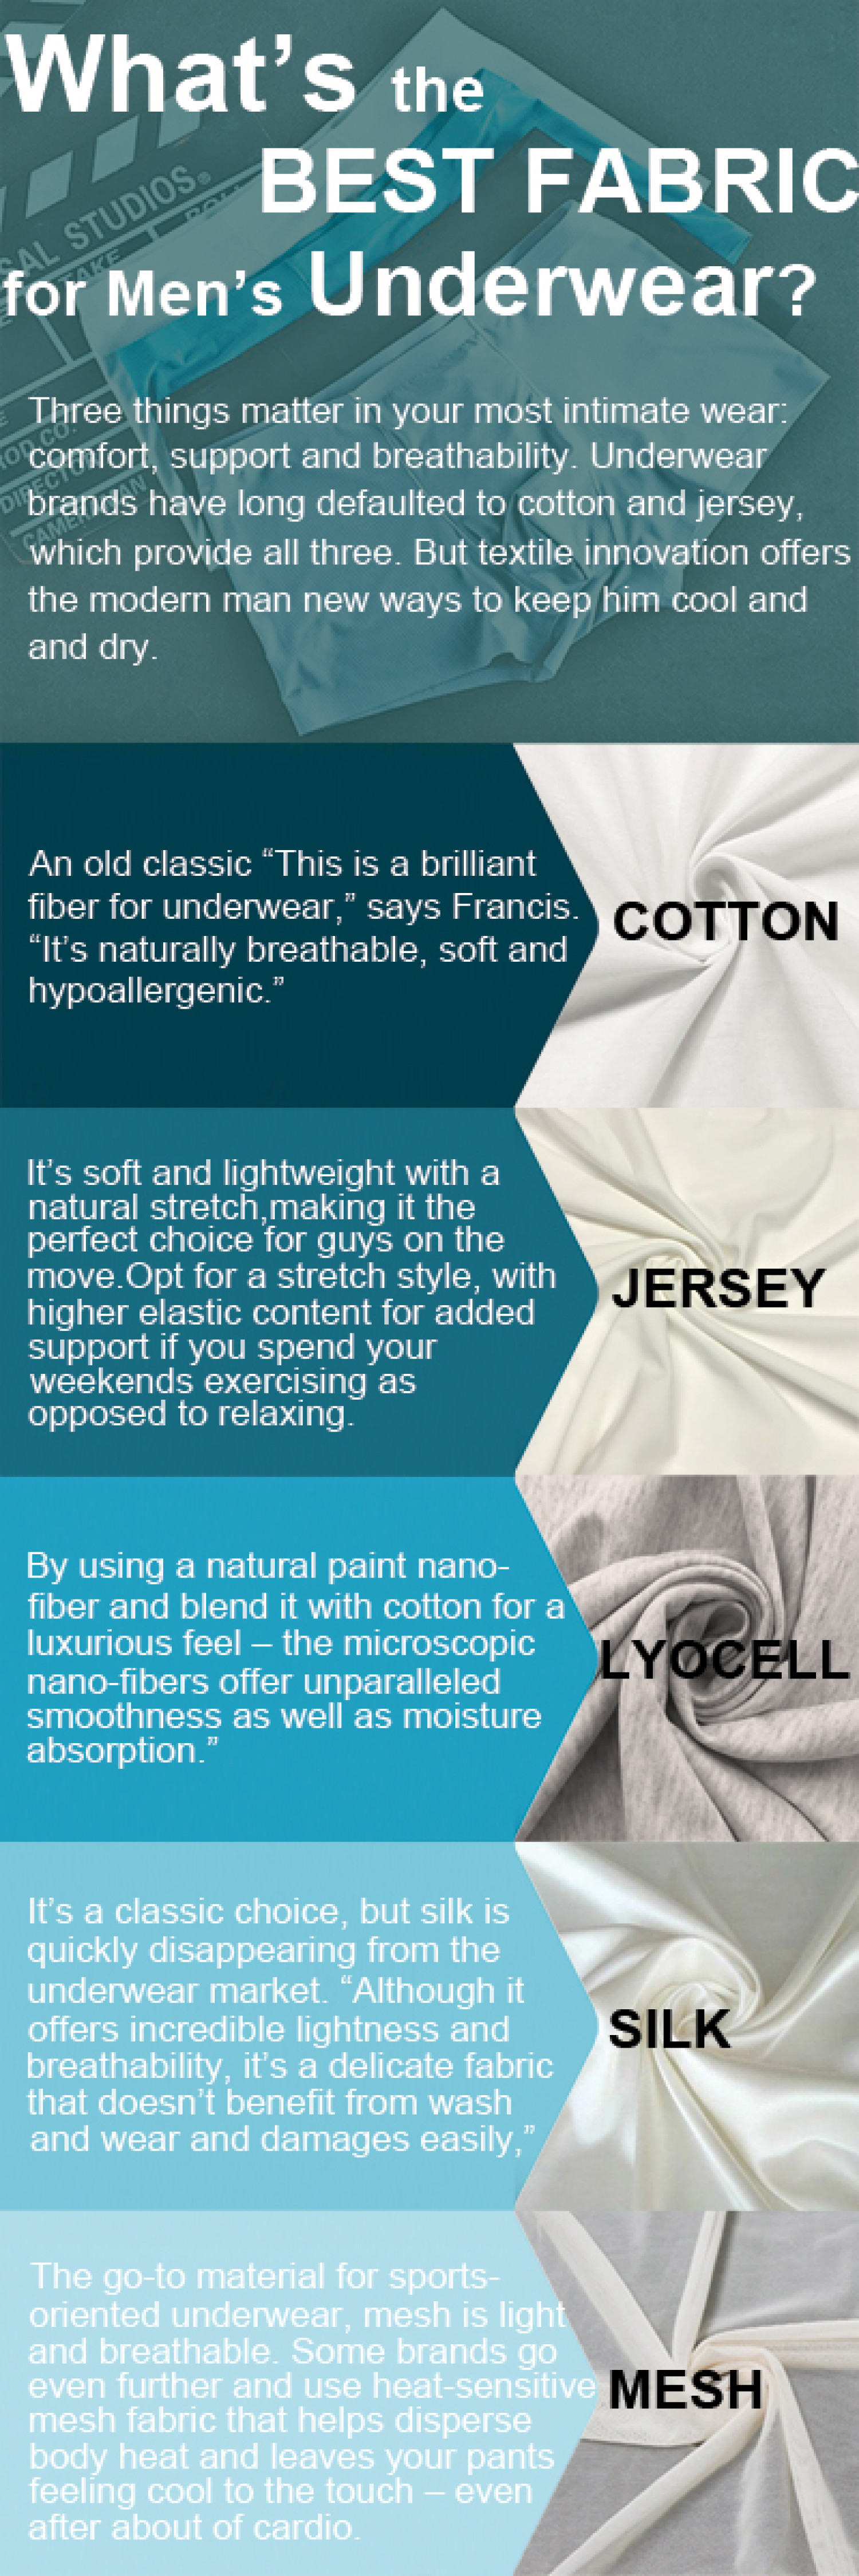 What's the Best Fabric for Men's Underwear - International Jock Infographic